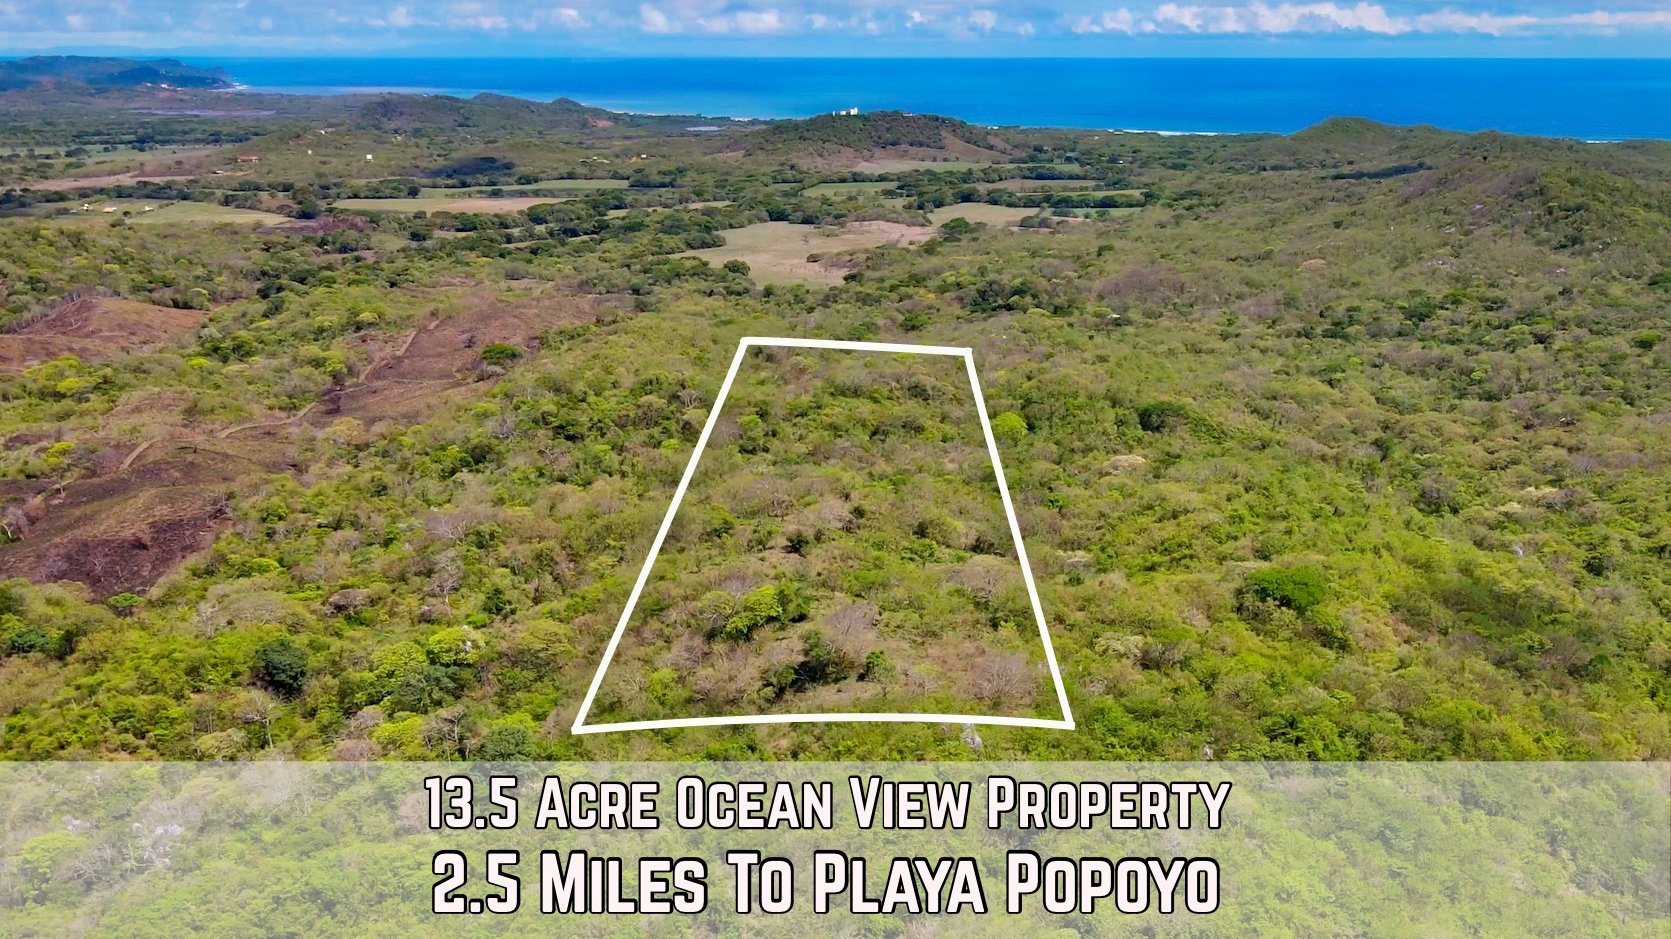 Land Acreage Property Popoyo Nicaragua Surf Beach YouTube Profile.jpg